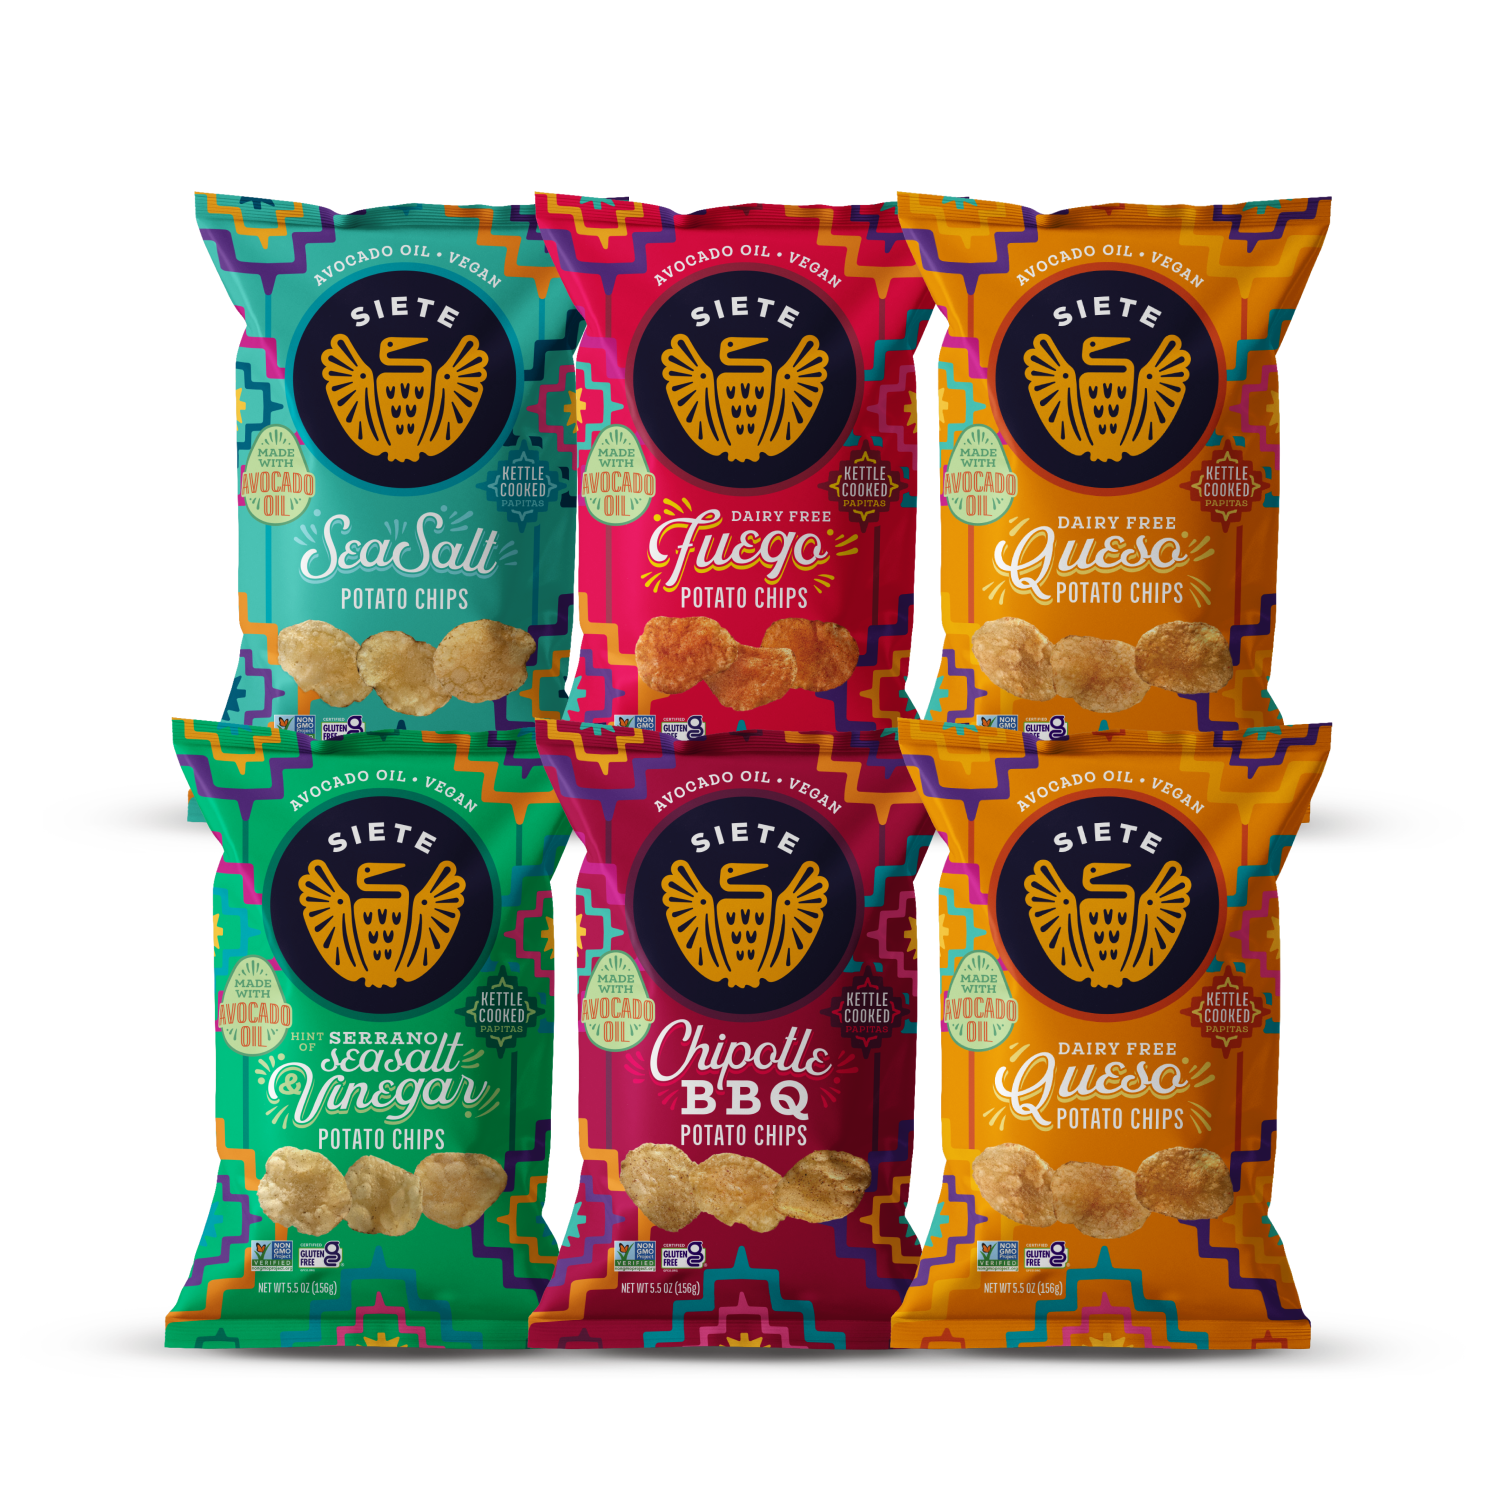 open bag of chips clip art